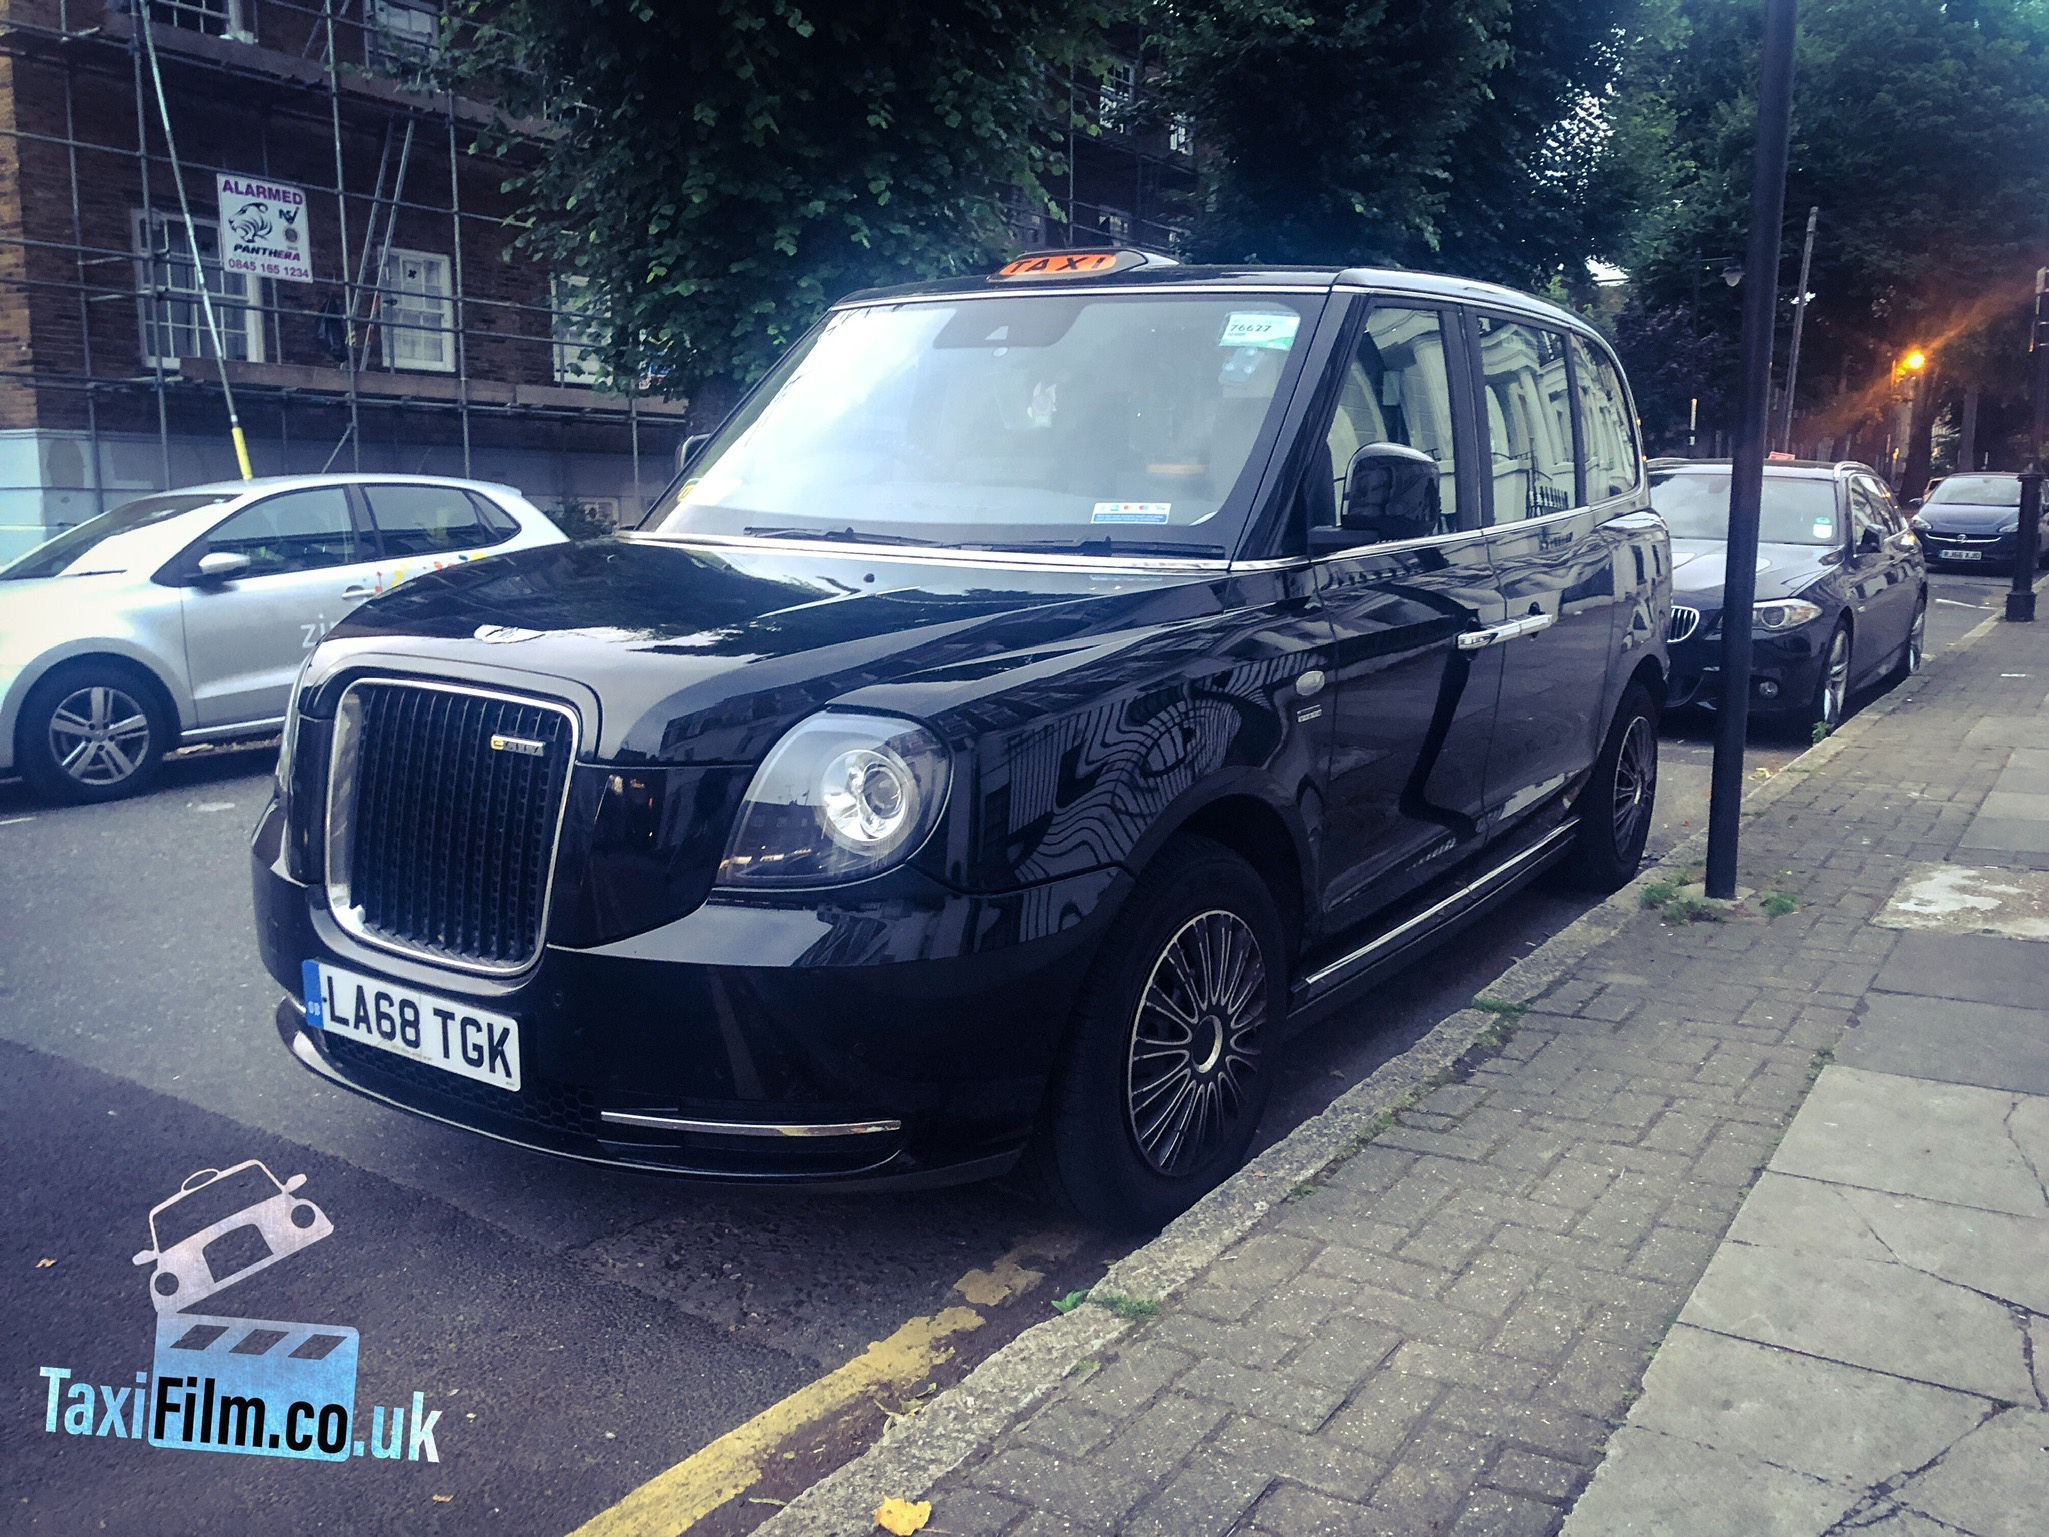 https://0501.nccdn.net/4_2/000/000/046/6ea/london-electric-prop-taxi-vehicle-2-2049x1537.jpg